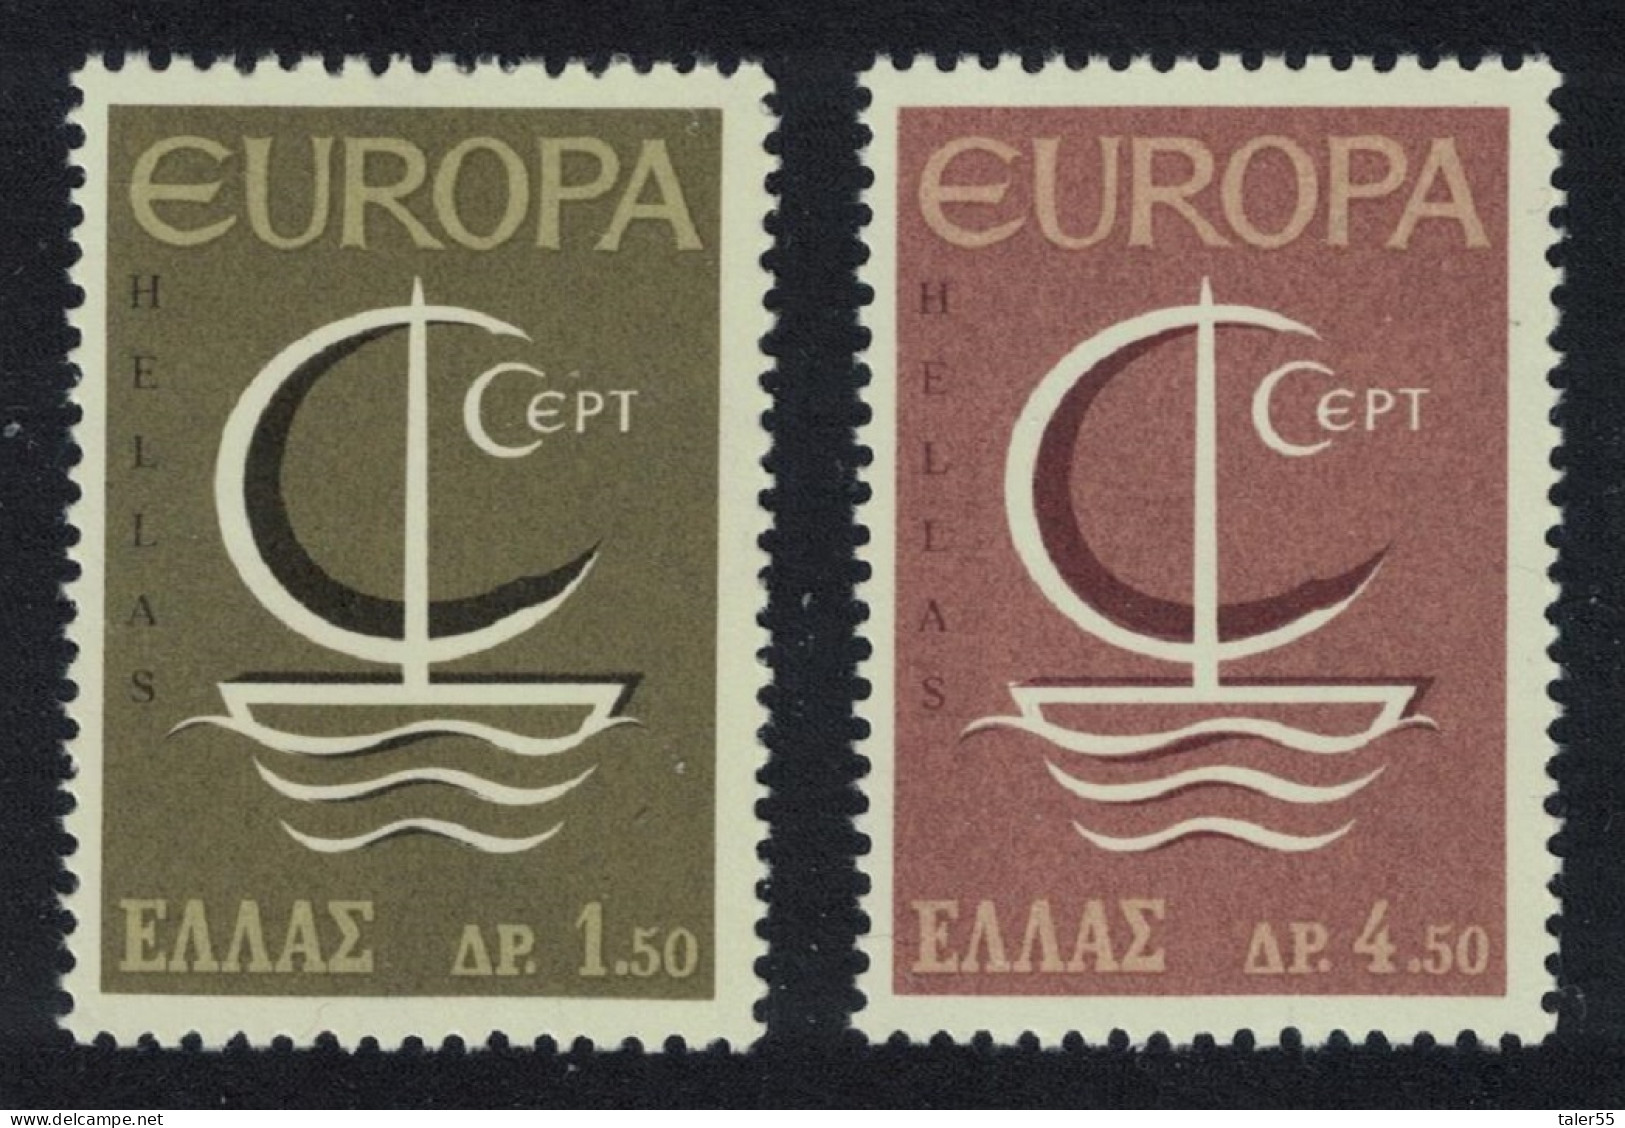 Greece Symbolic Ship Europa 2v 1966 MNH SG#1021-1022 MI#919-920 Sc#862-863 - Nuovi